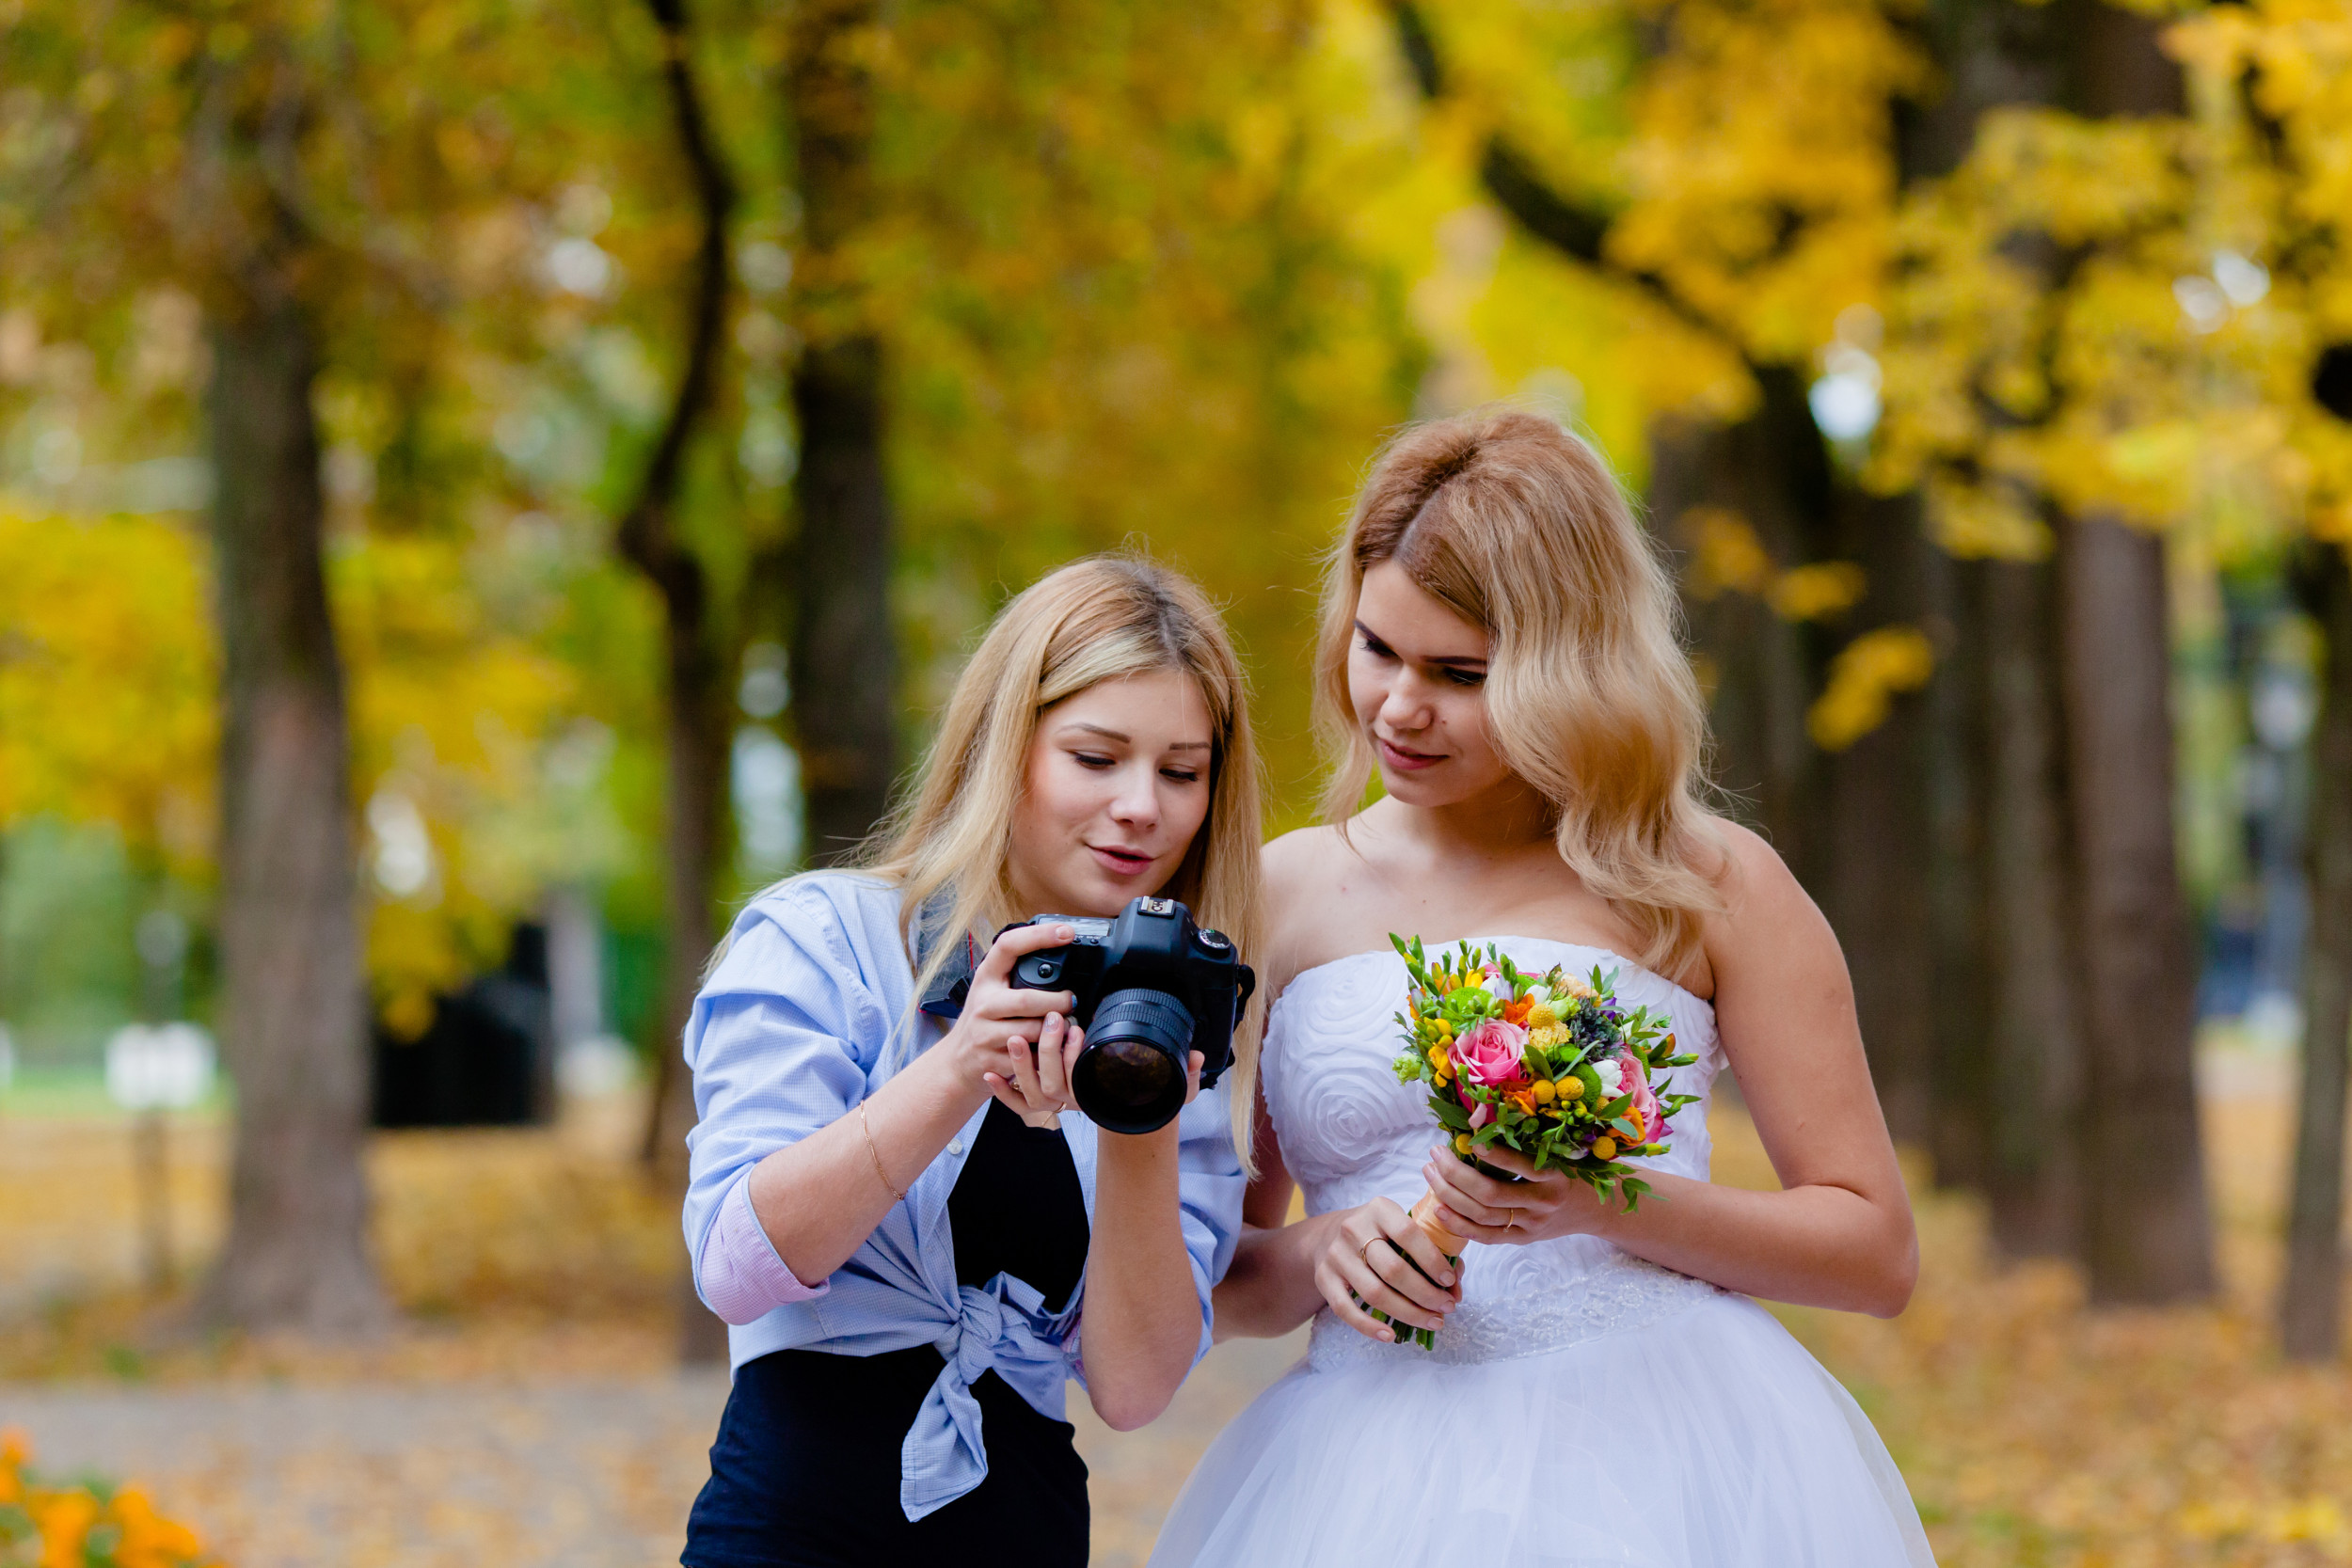  Internet Backs Wedding Photographer